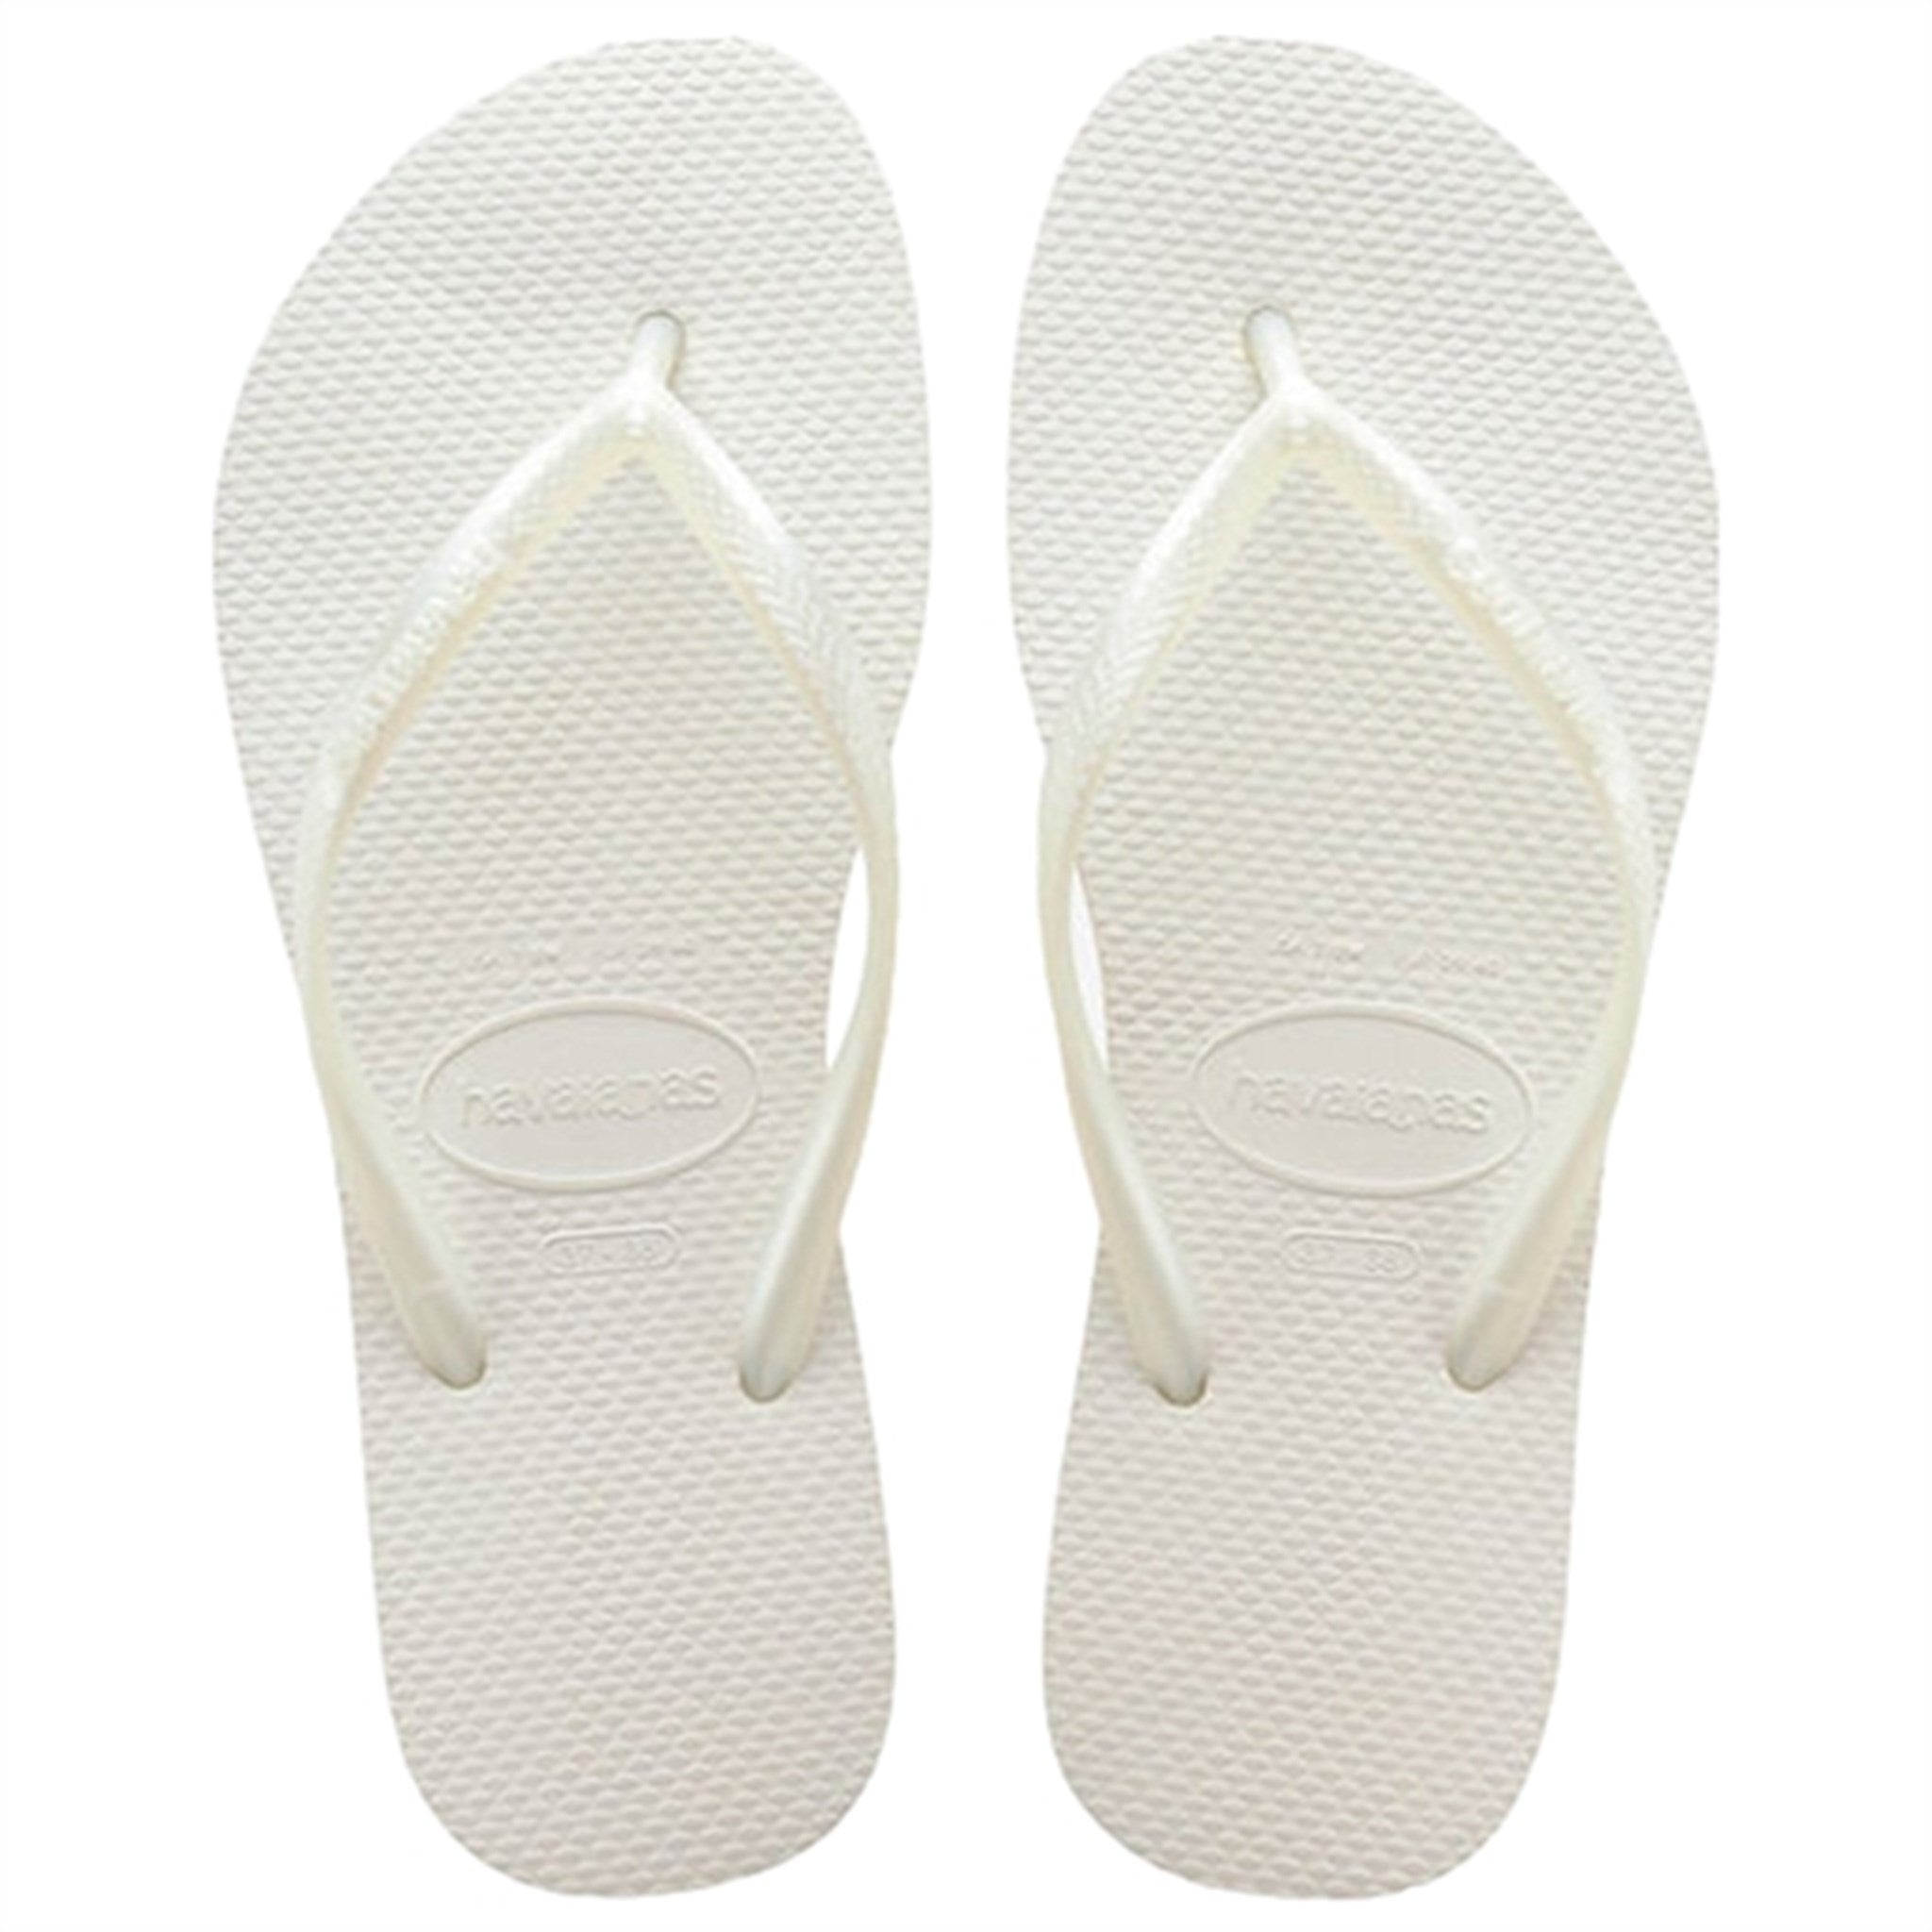 Havaianas Sandals Slim White